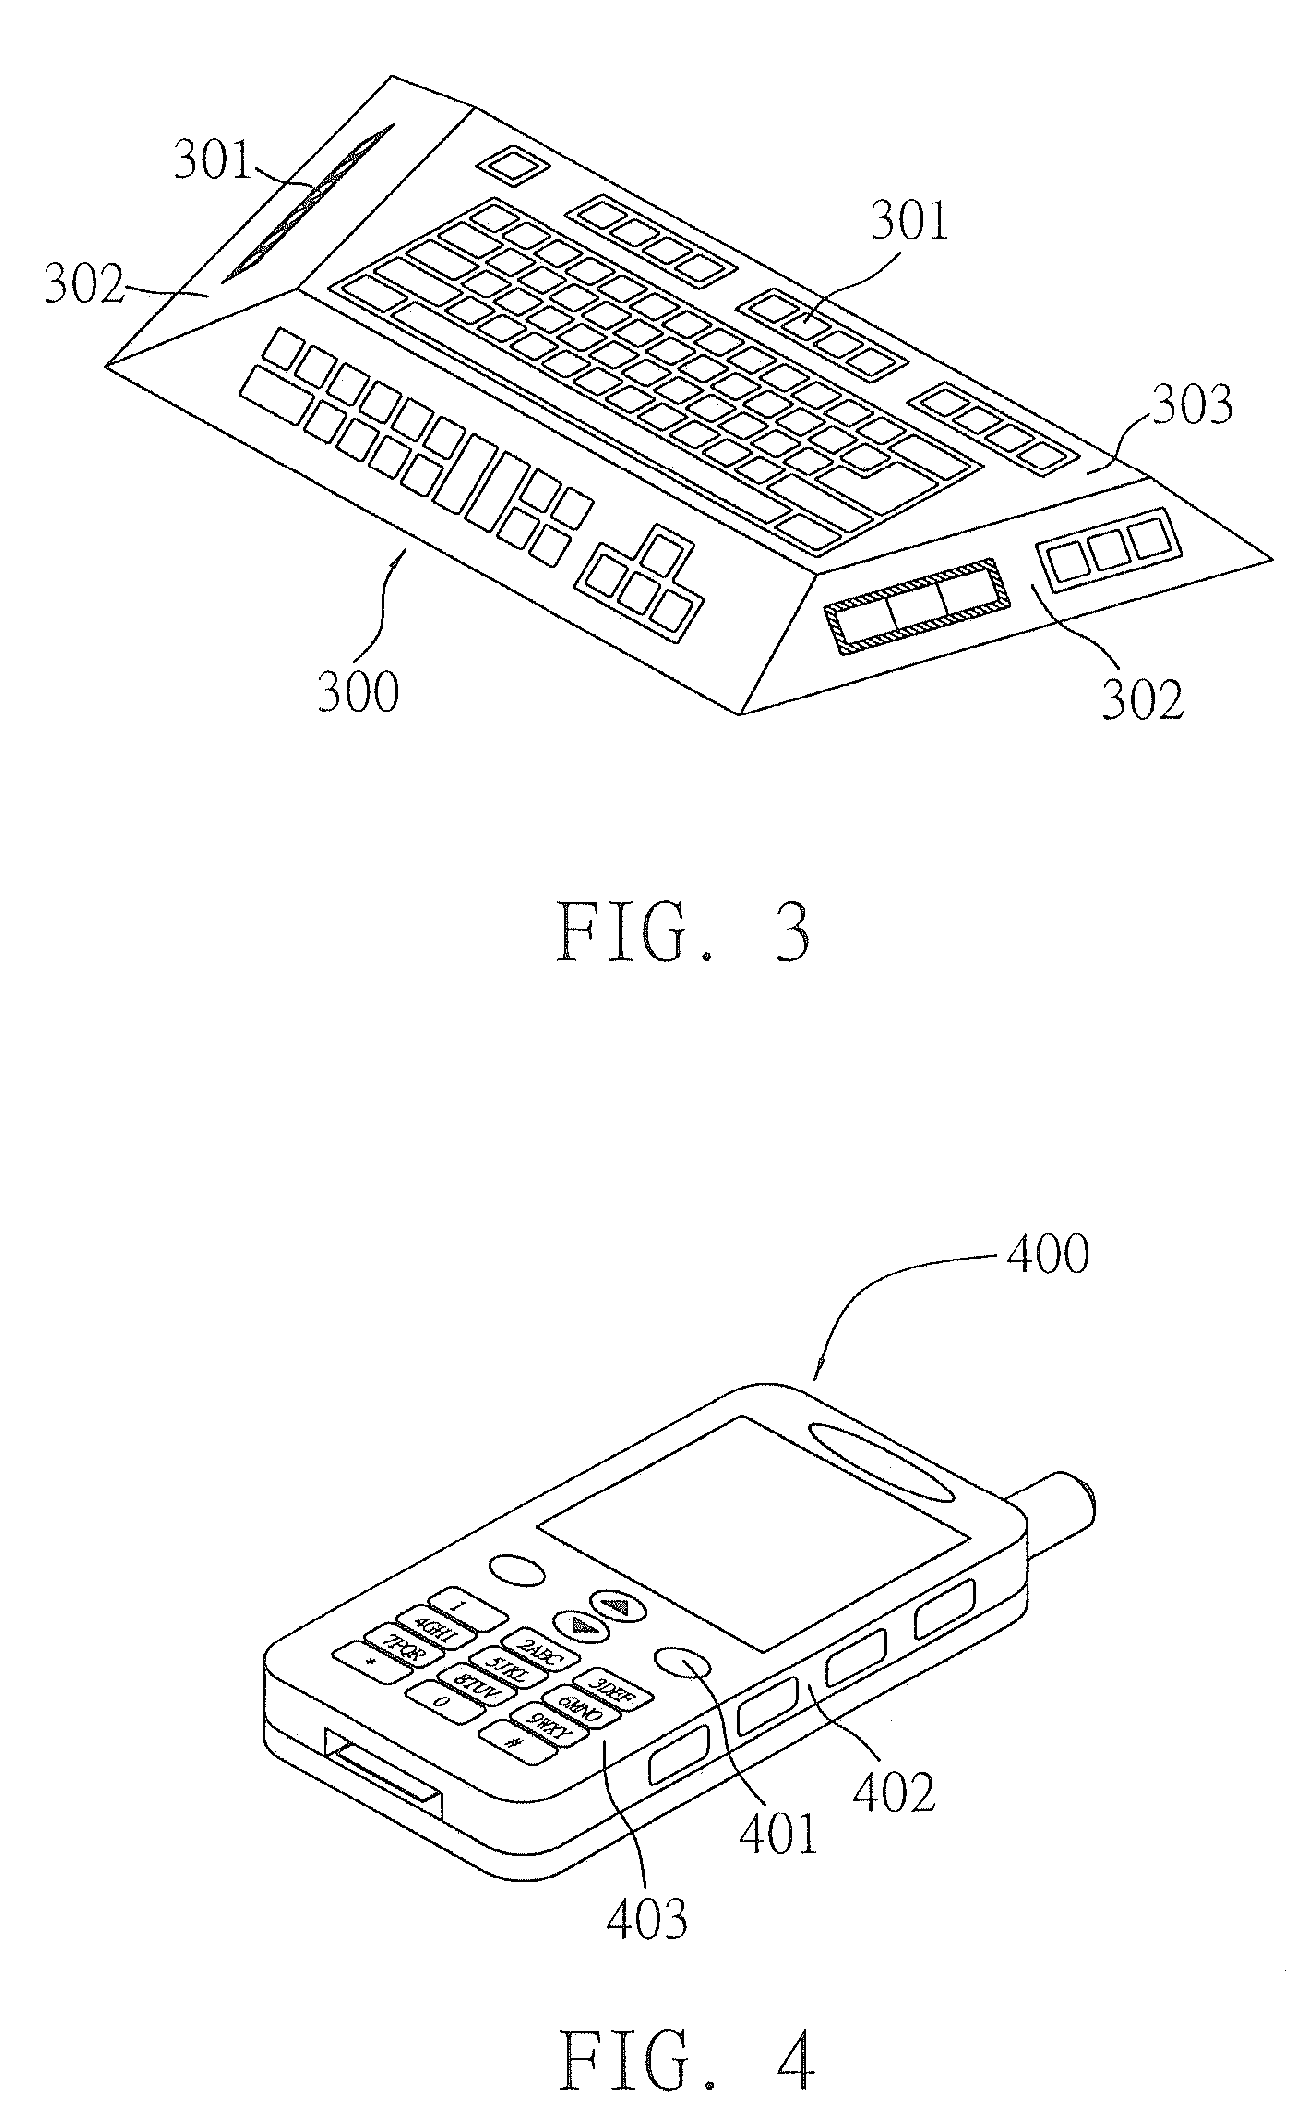 Input unit having three-dimensionally arranged keys for electronic device